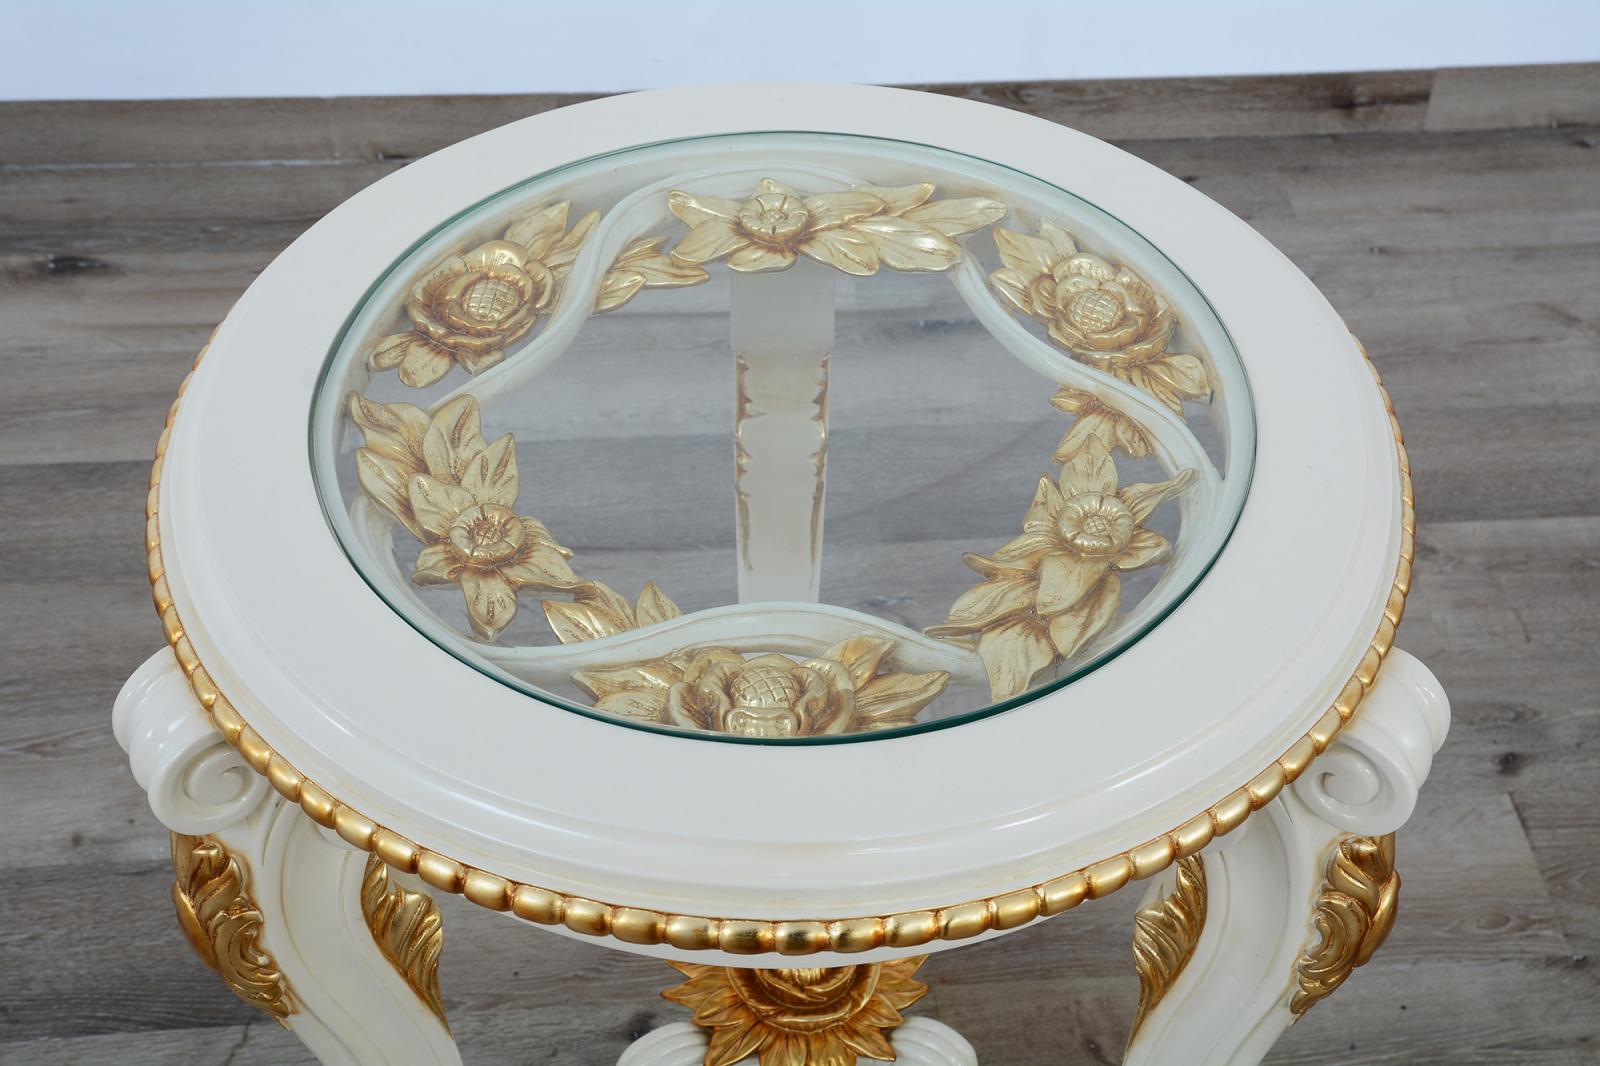 Antique Beige & Gold Luxury BELLAGIO Round Side Table EUROPEAN FURNITURE - image 3 of 3